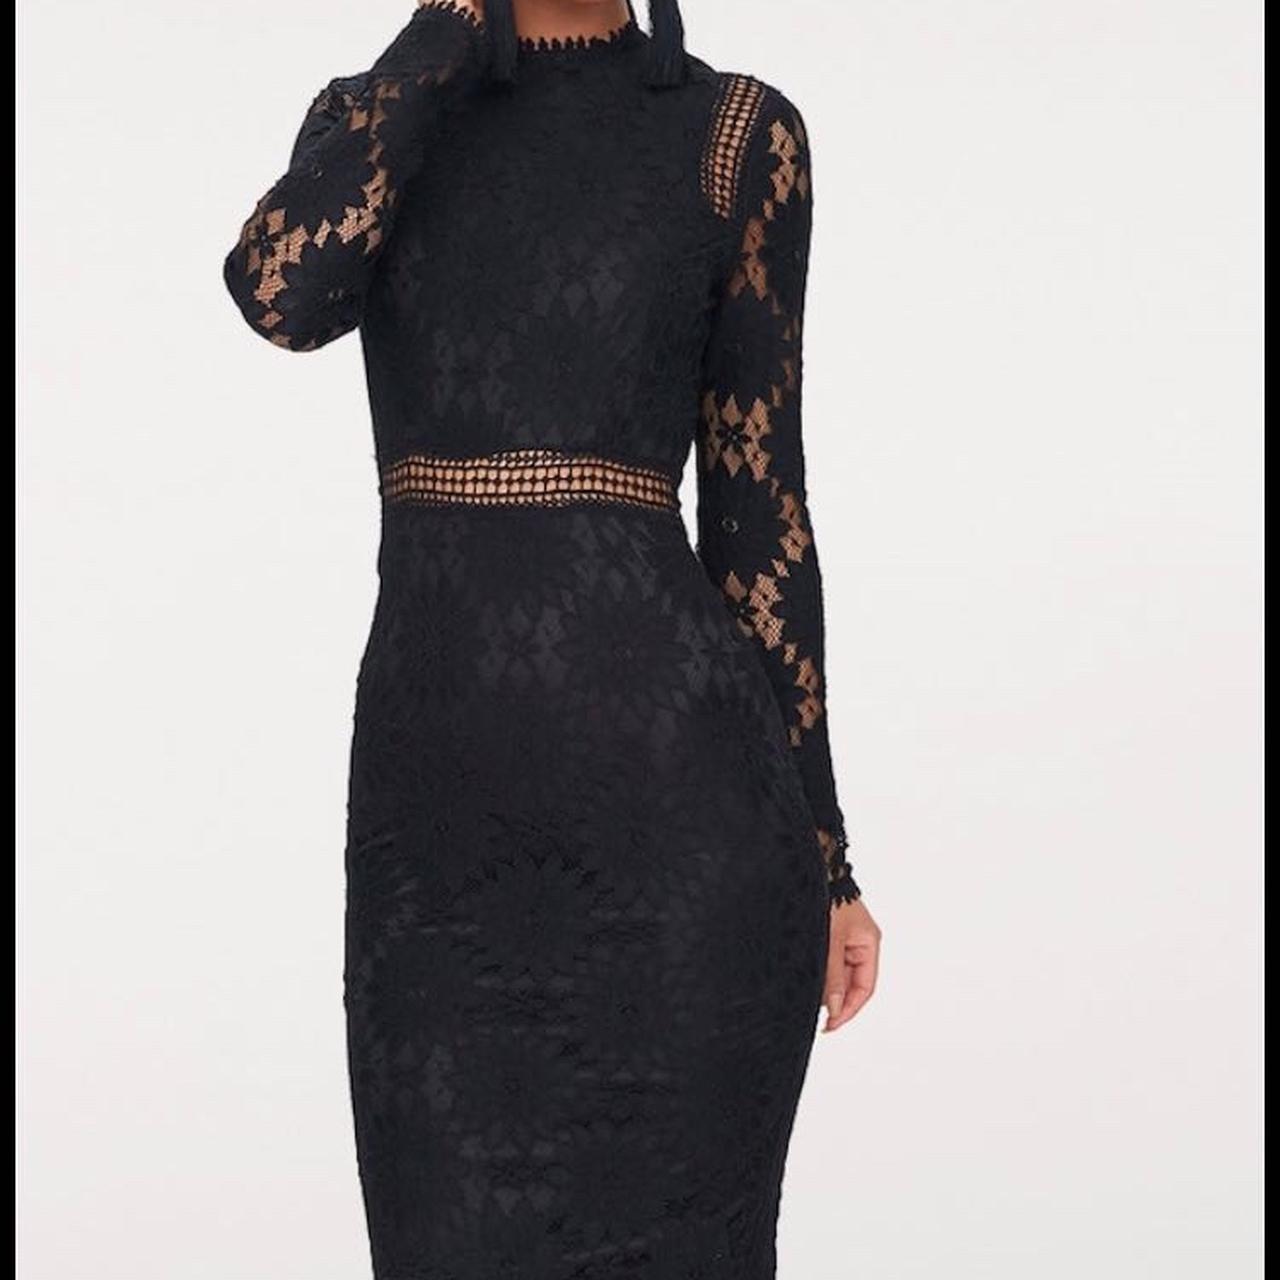 Caris Black Long Sleeve Lace Bodycon Dress